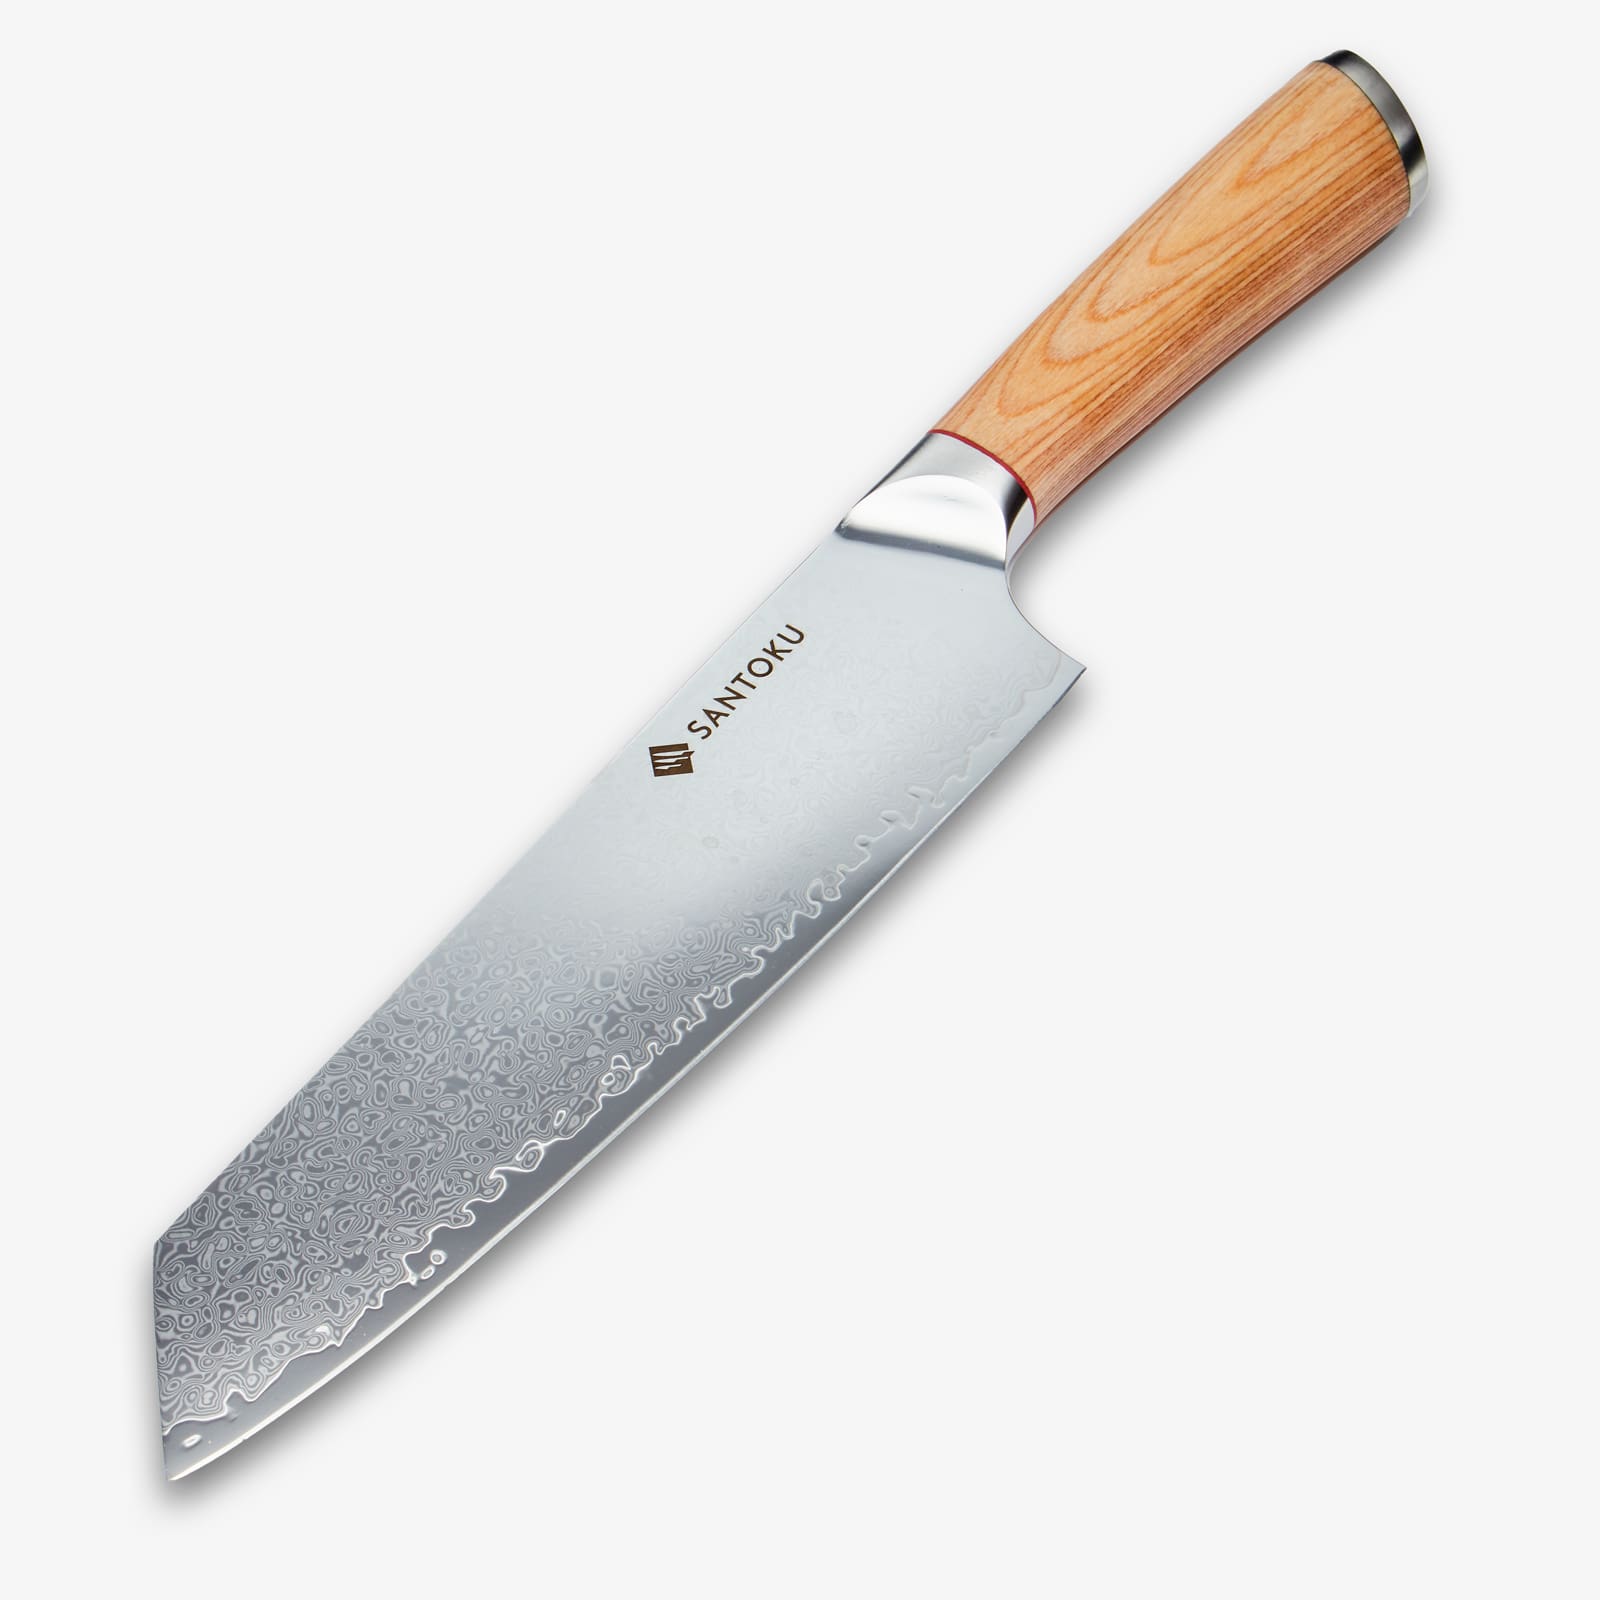 Haruta (はる た) 8 tum kiritsuke kniv